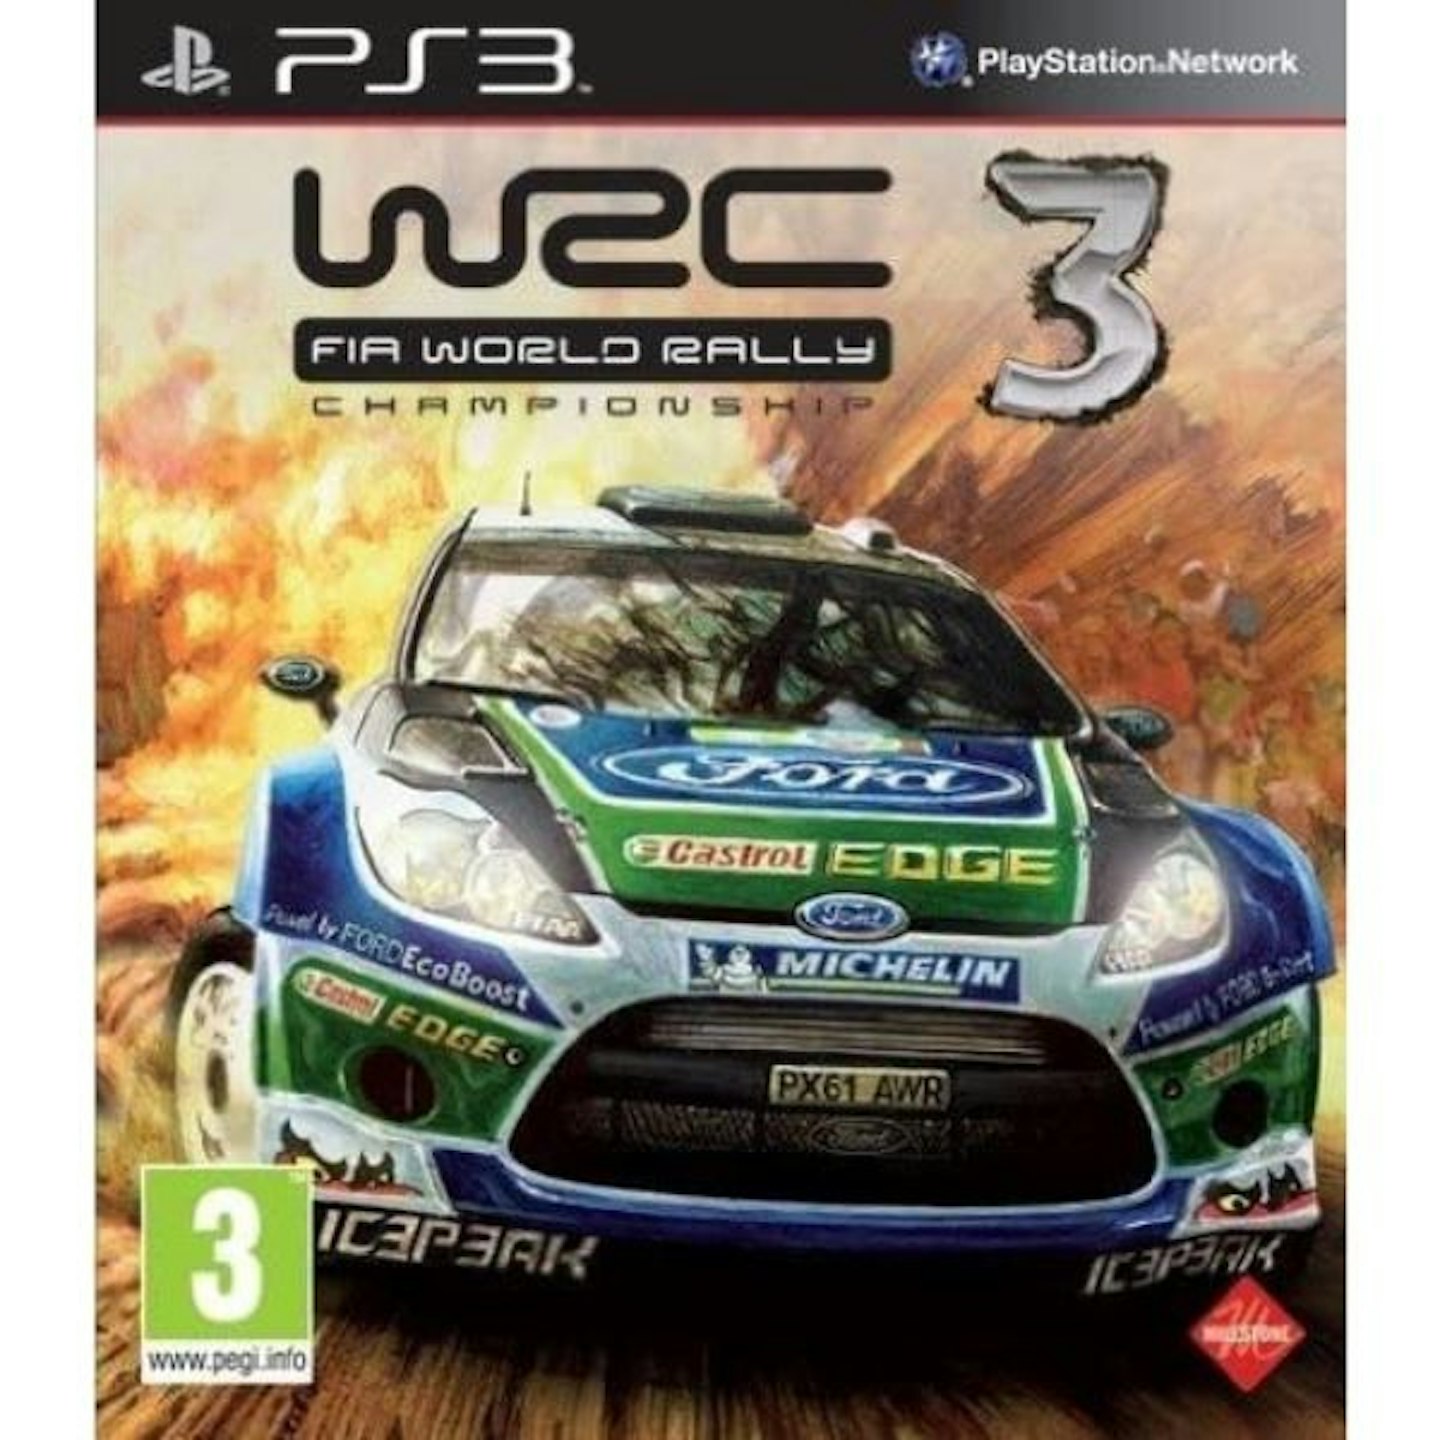 WRC 3 - World Rally Championship (PS3)